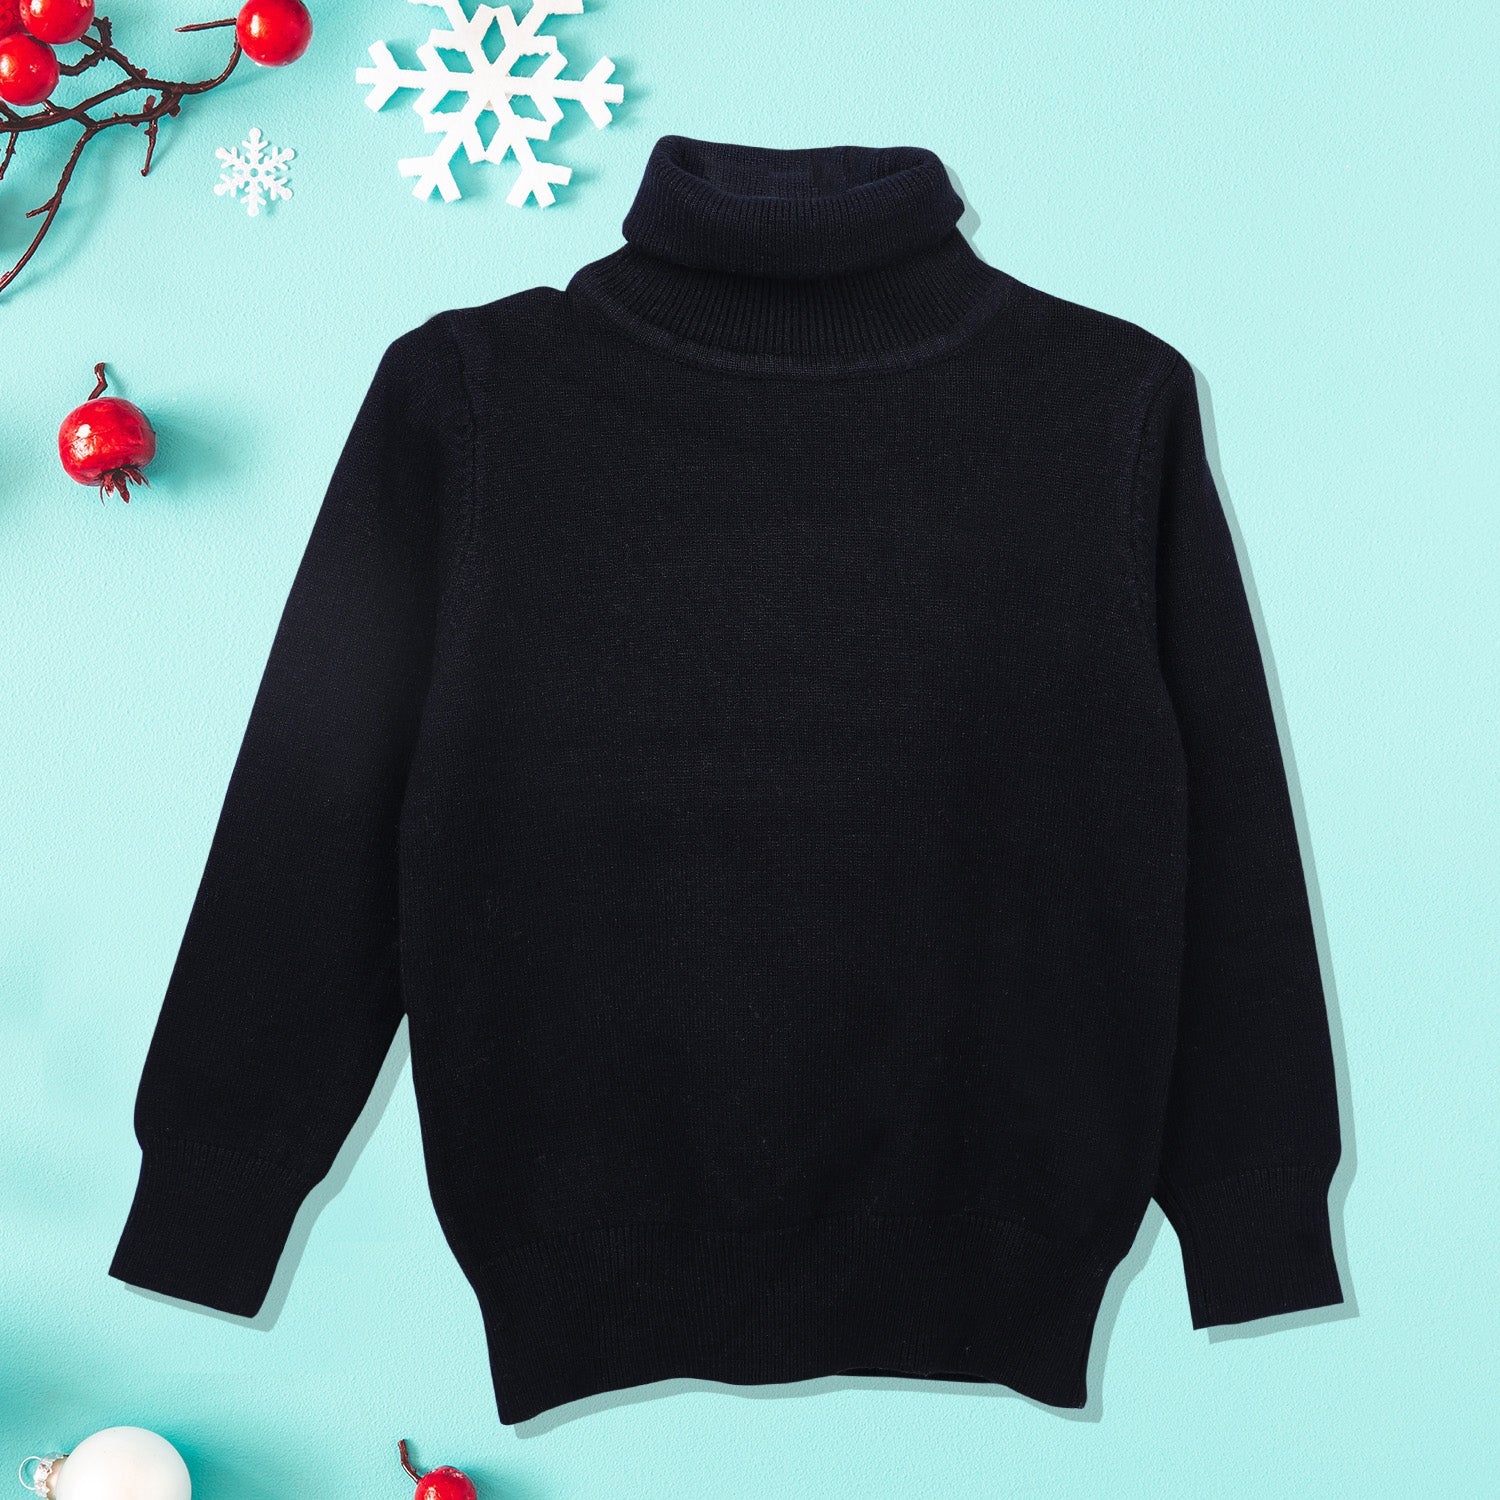 Basic Polo Neck Ribbed Premium Full Sleeves Knitted Kids Sweater - Black